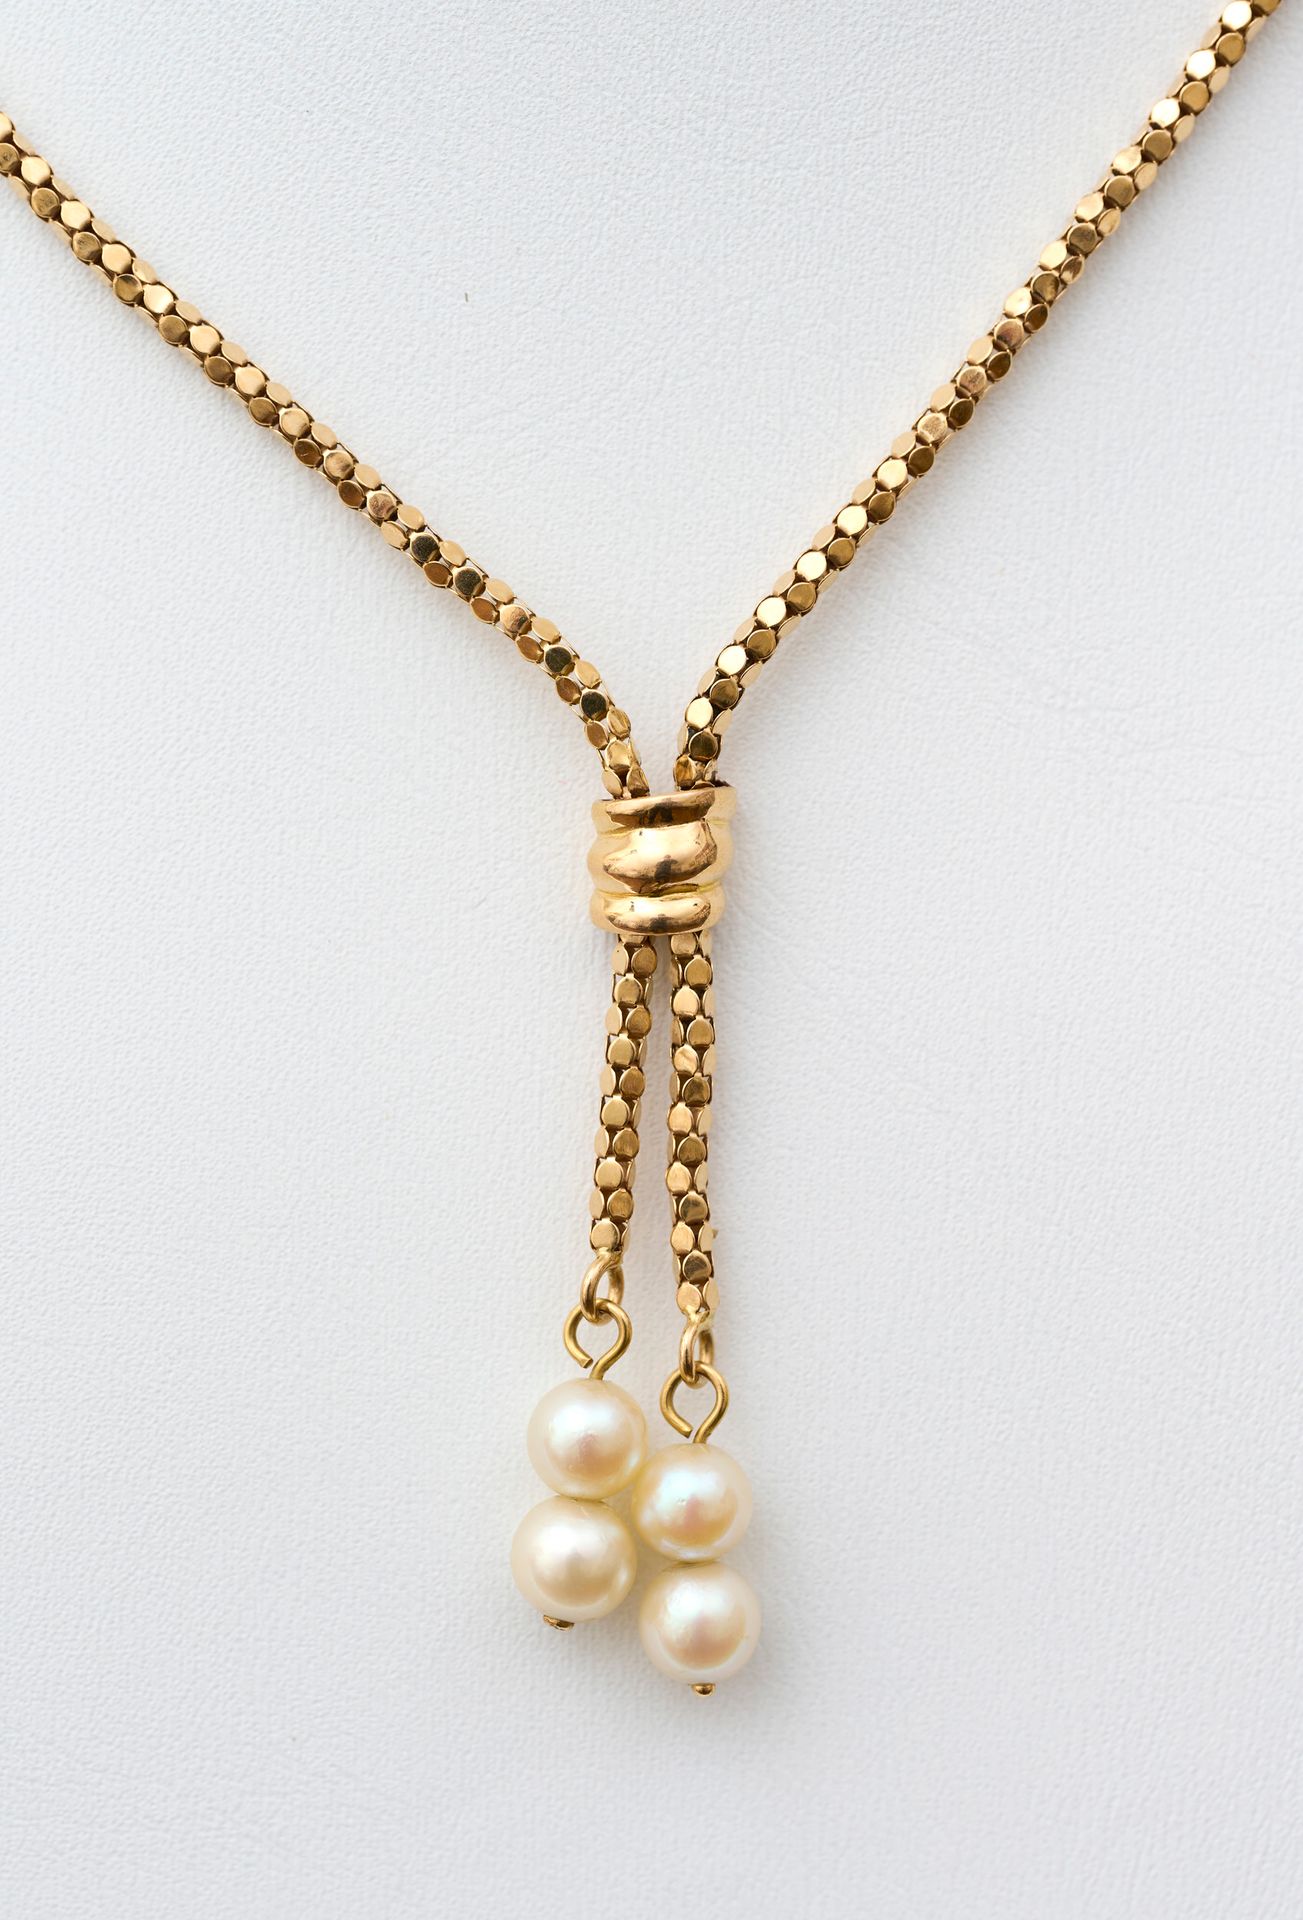 Collier 18克拉黄金（750/000）项链，花式网状结尾，有两个吊坠容纳4颗养殖珍珠。